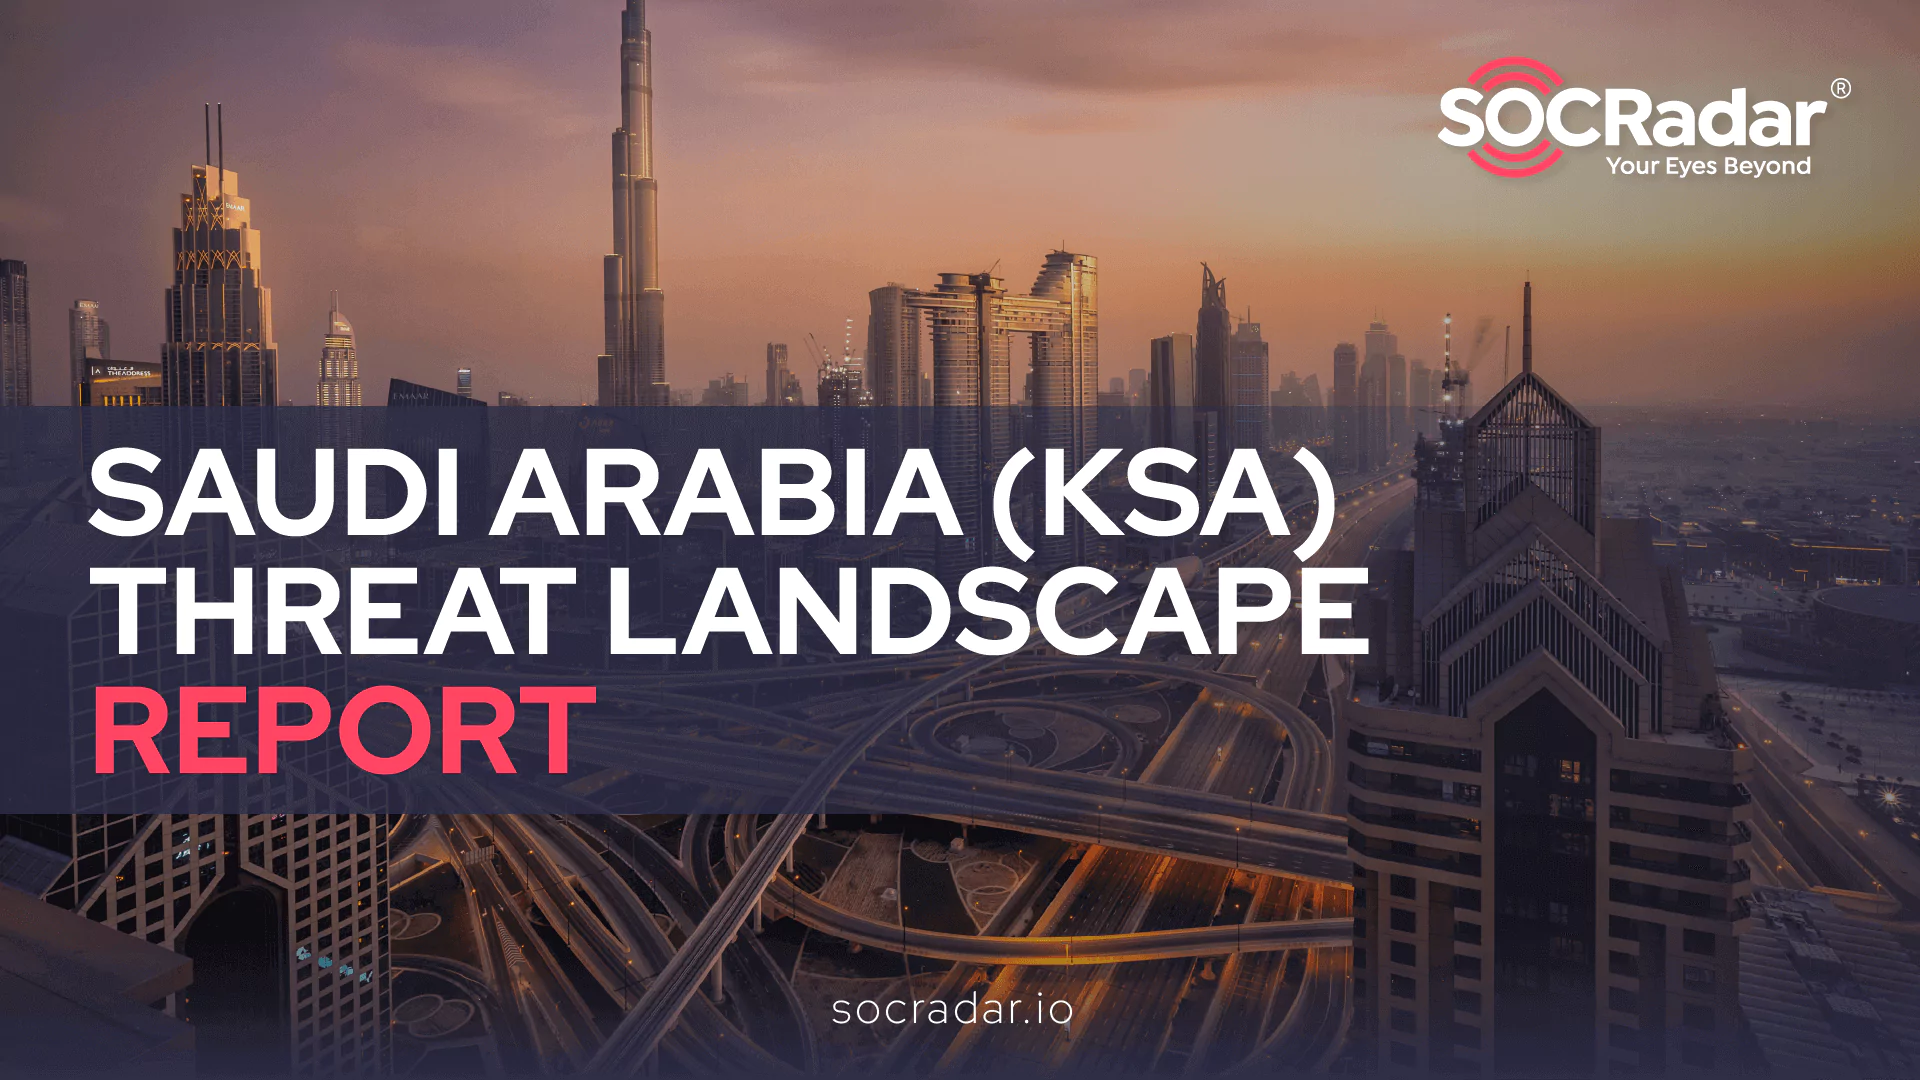 SOCRadar® Cyber Intelligence Inc. | A Brief Look at SOCRadar’s Saudi Arabia Threat Landscape Report